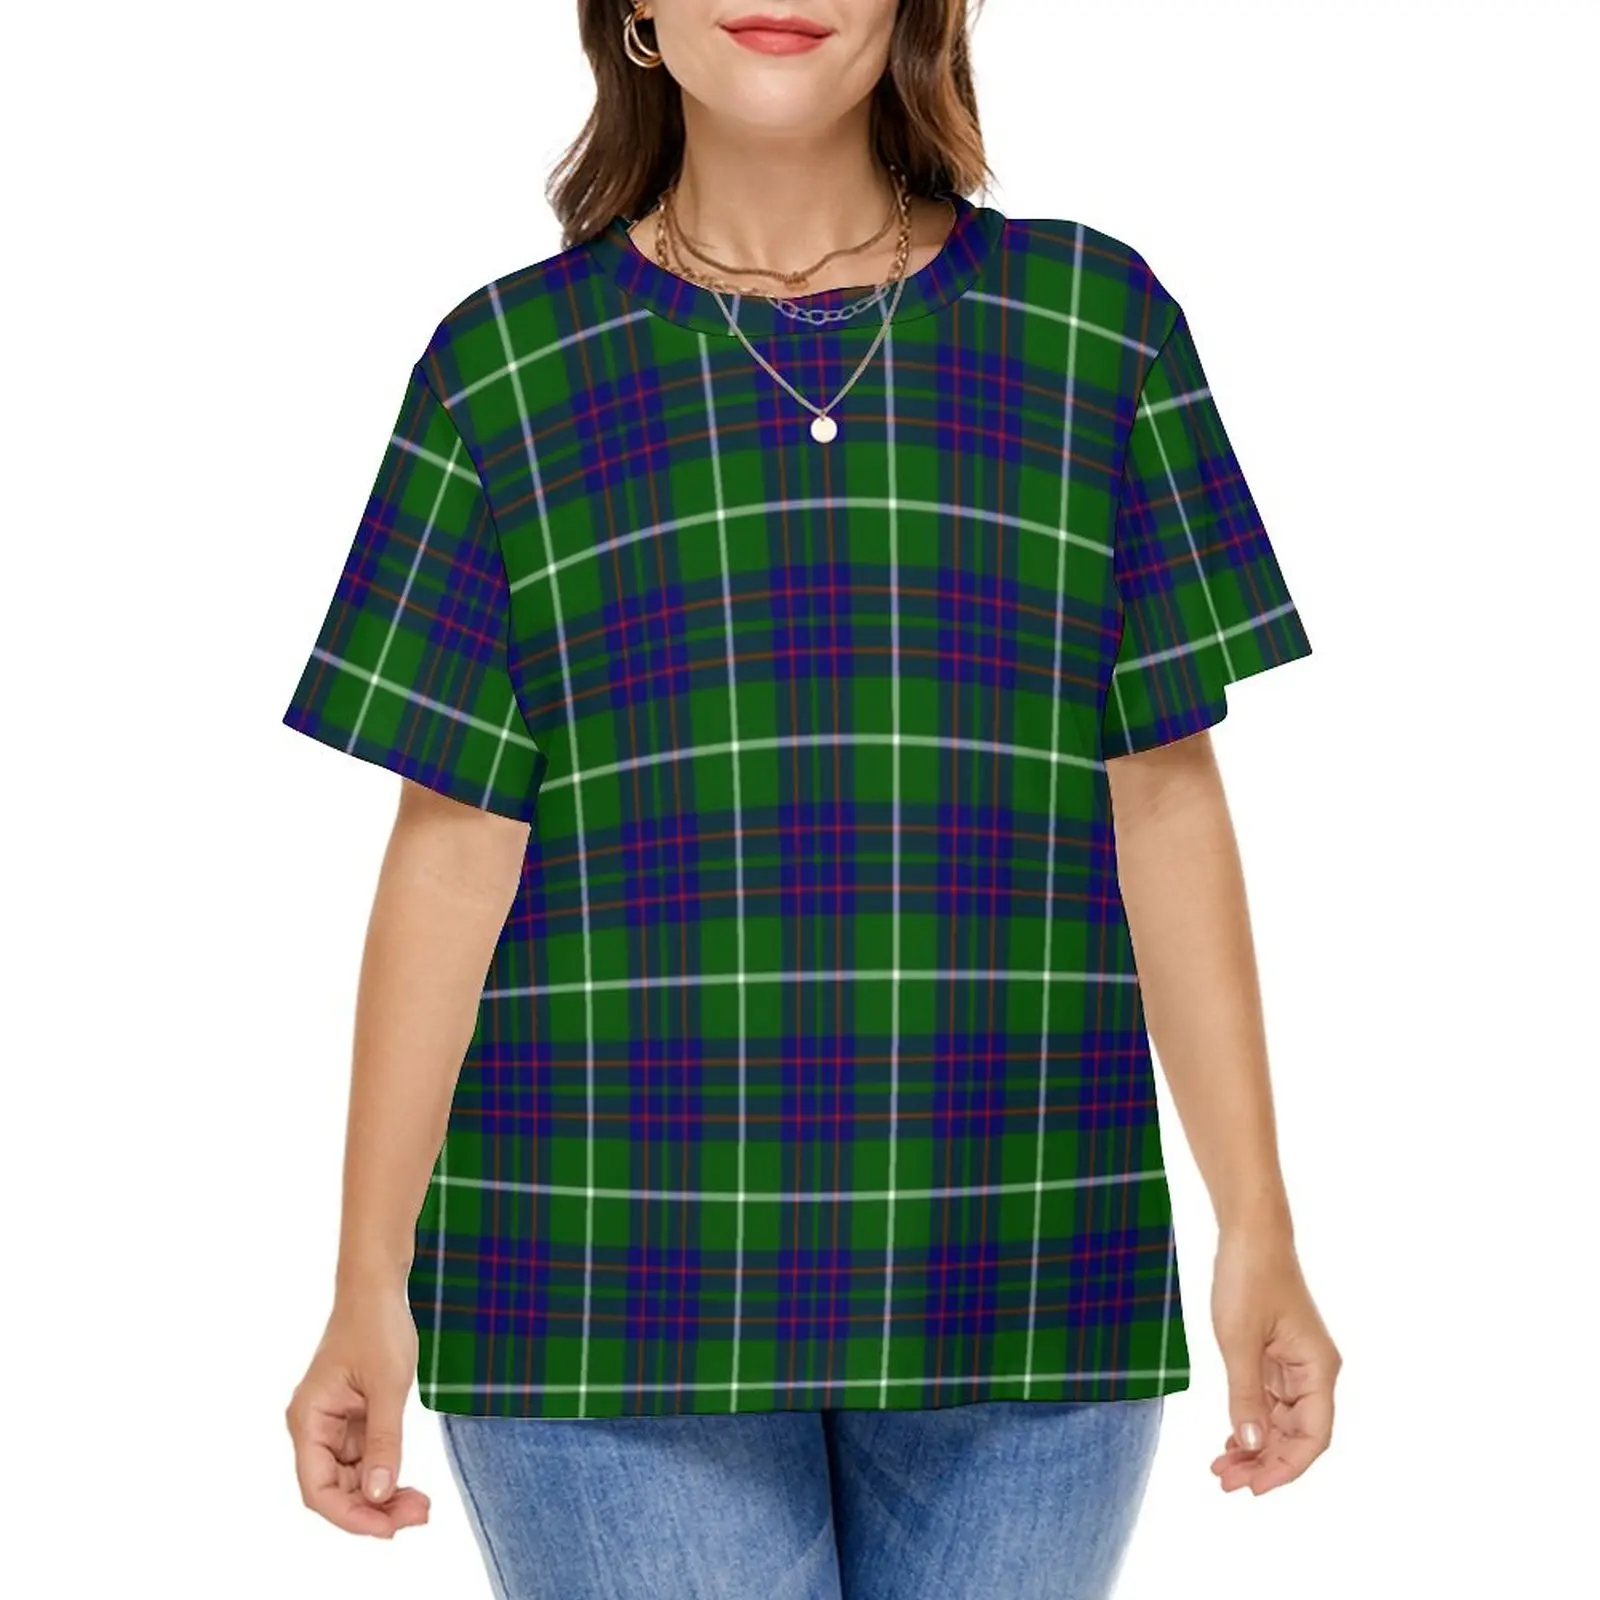 Retro Plaid Print T Shirts Clan MacIntyre Tartan Casual T-Shirt Short-Sleeve Funny Tee Shirt Graphic Top Tees Plus Size 5XL 6XL